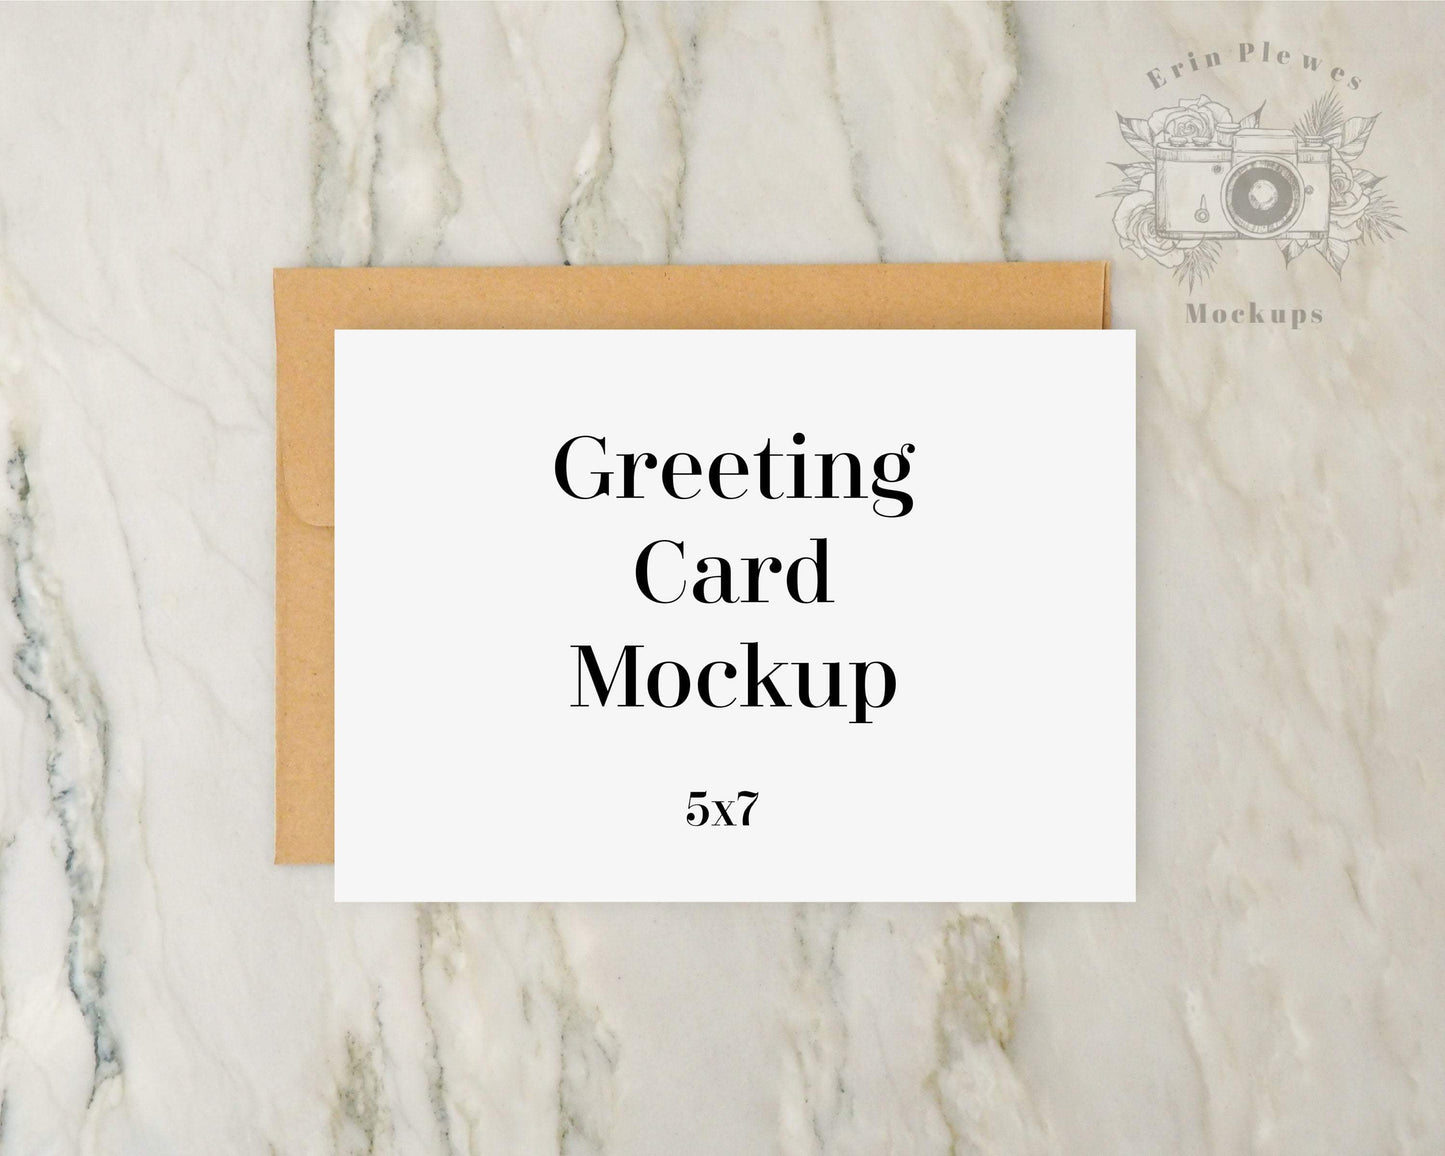 Erin Plewes Mockups A7 Card mockup with kraft envelope, Invitation mock up on marble for styled lifestyle flatlay, Jpeg Instant Digital Download Template